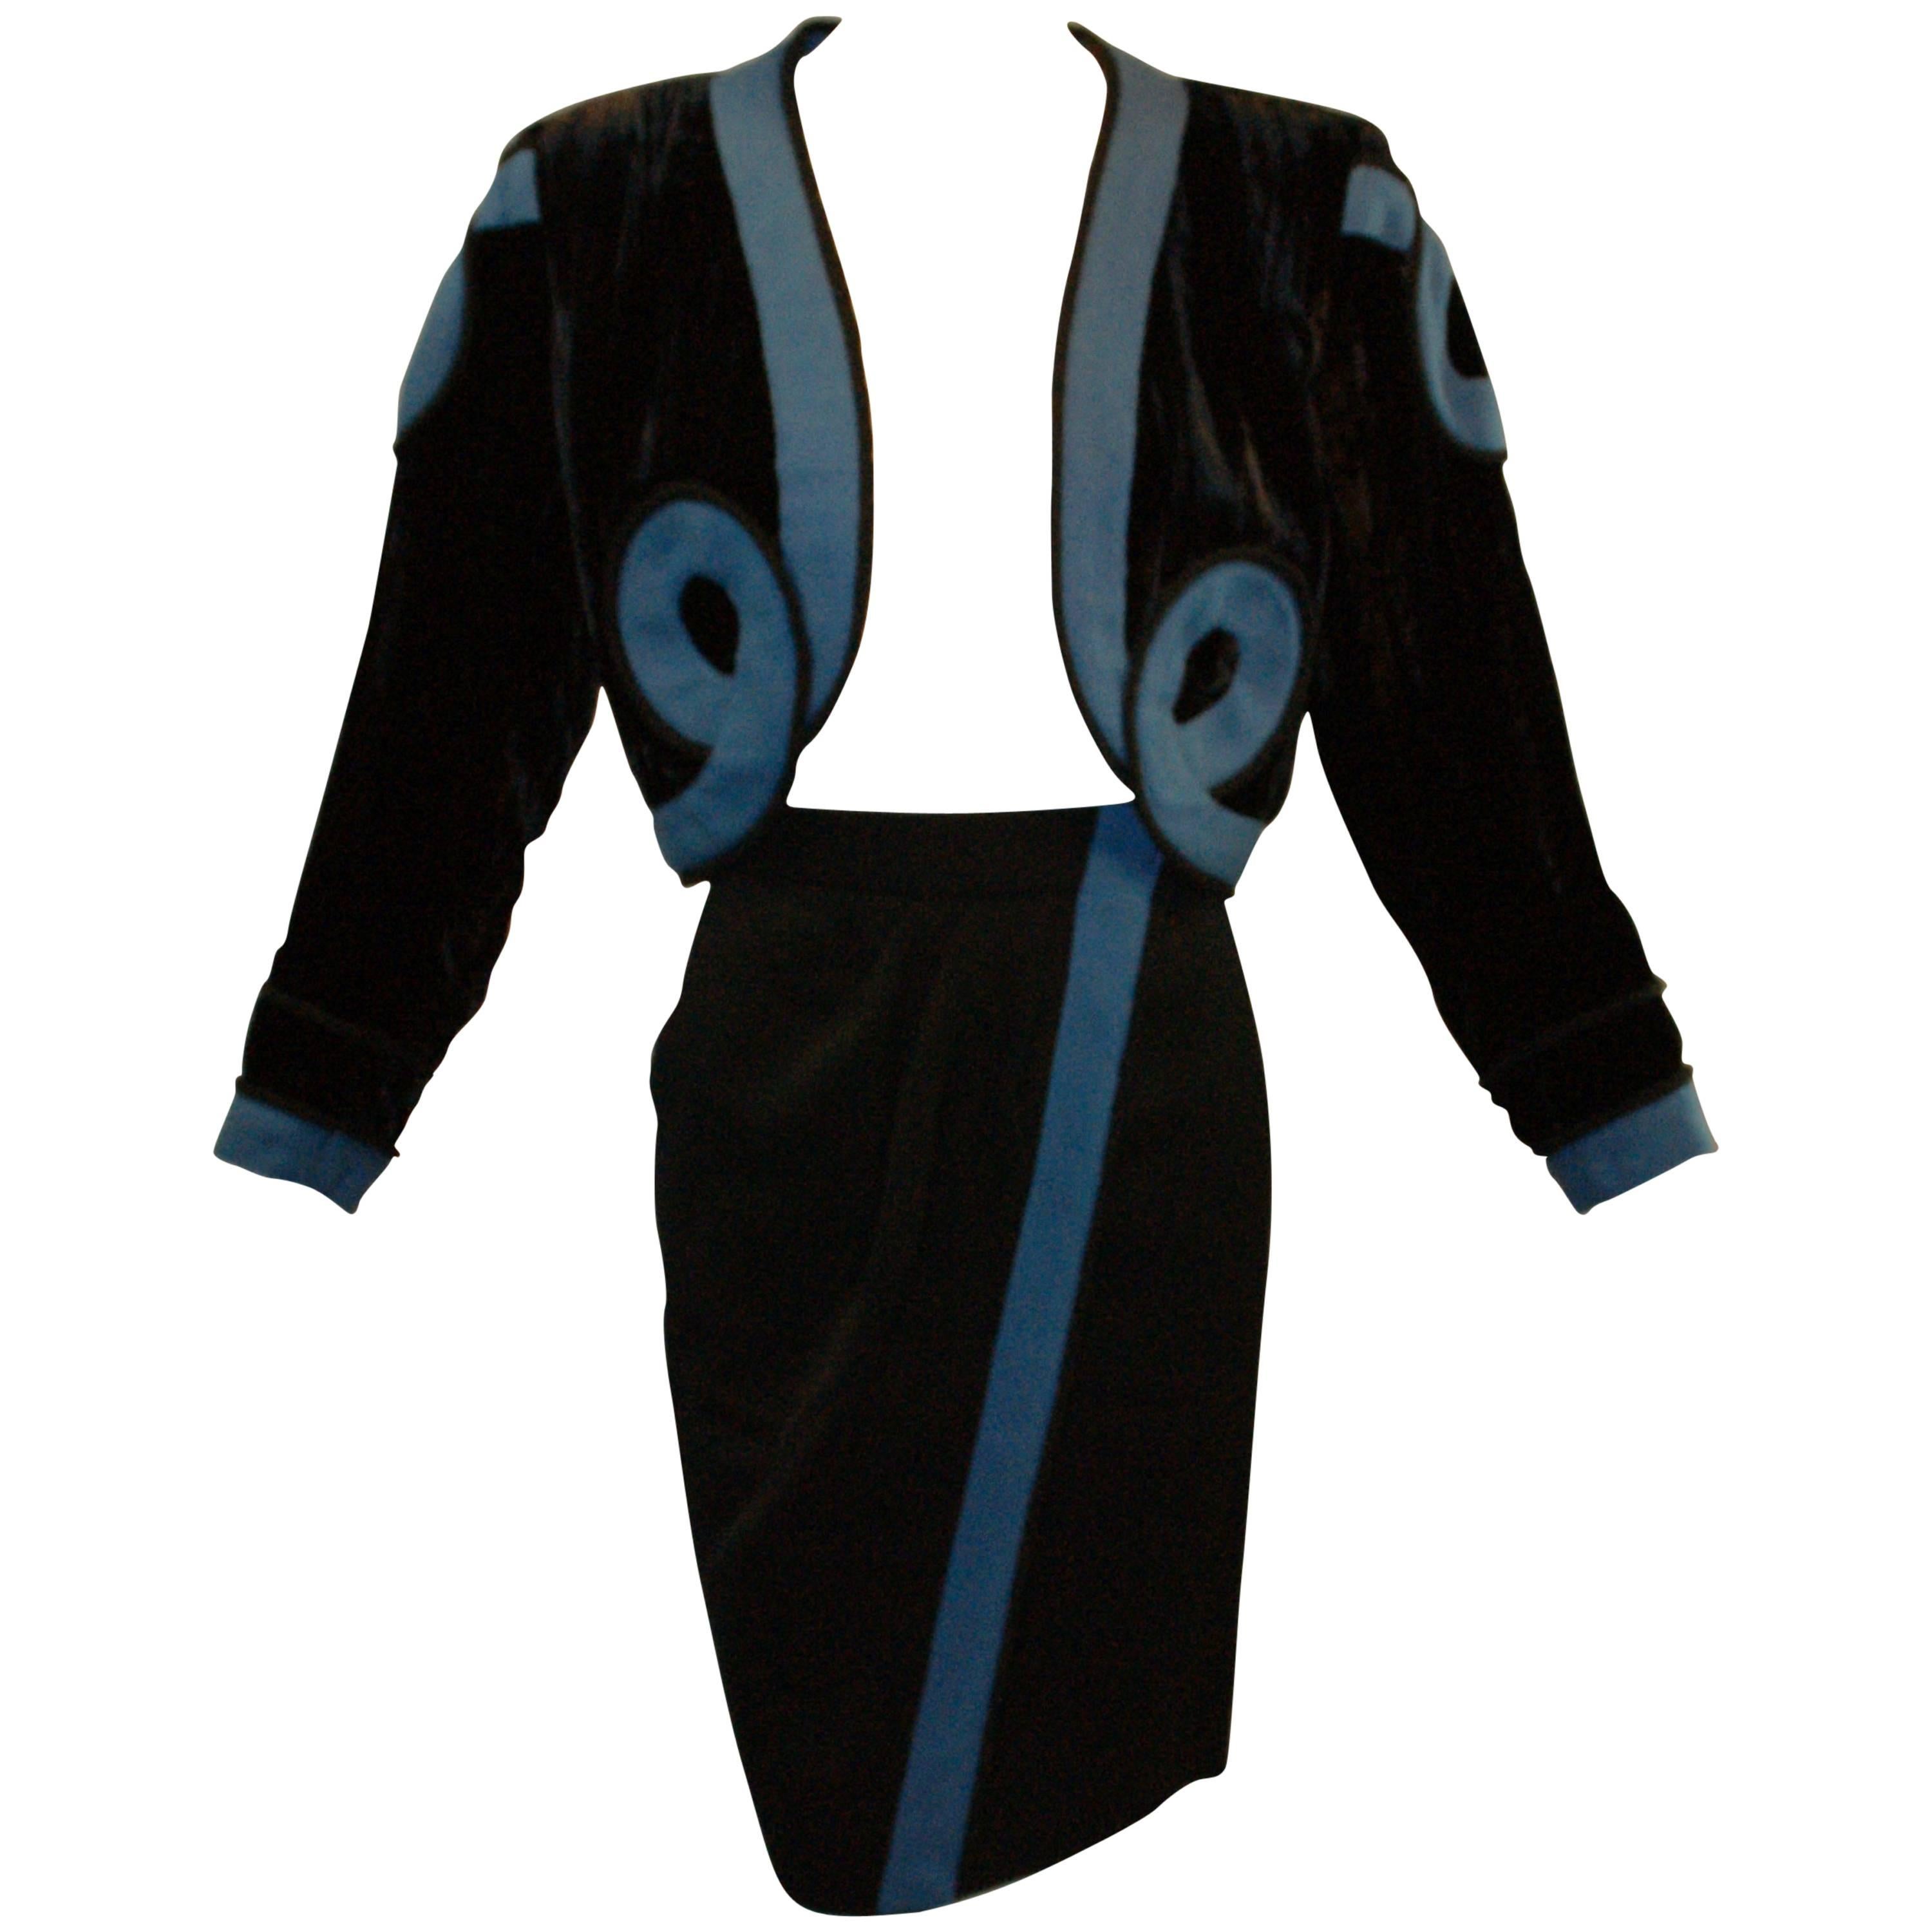 S/S 1991 Yves Saint Laurent Woven Rope Trim Toreador Crop Jacket Skirt Suit